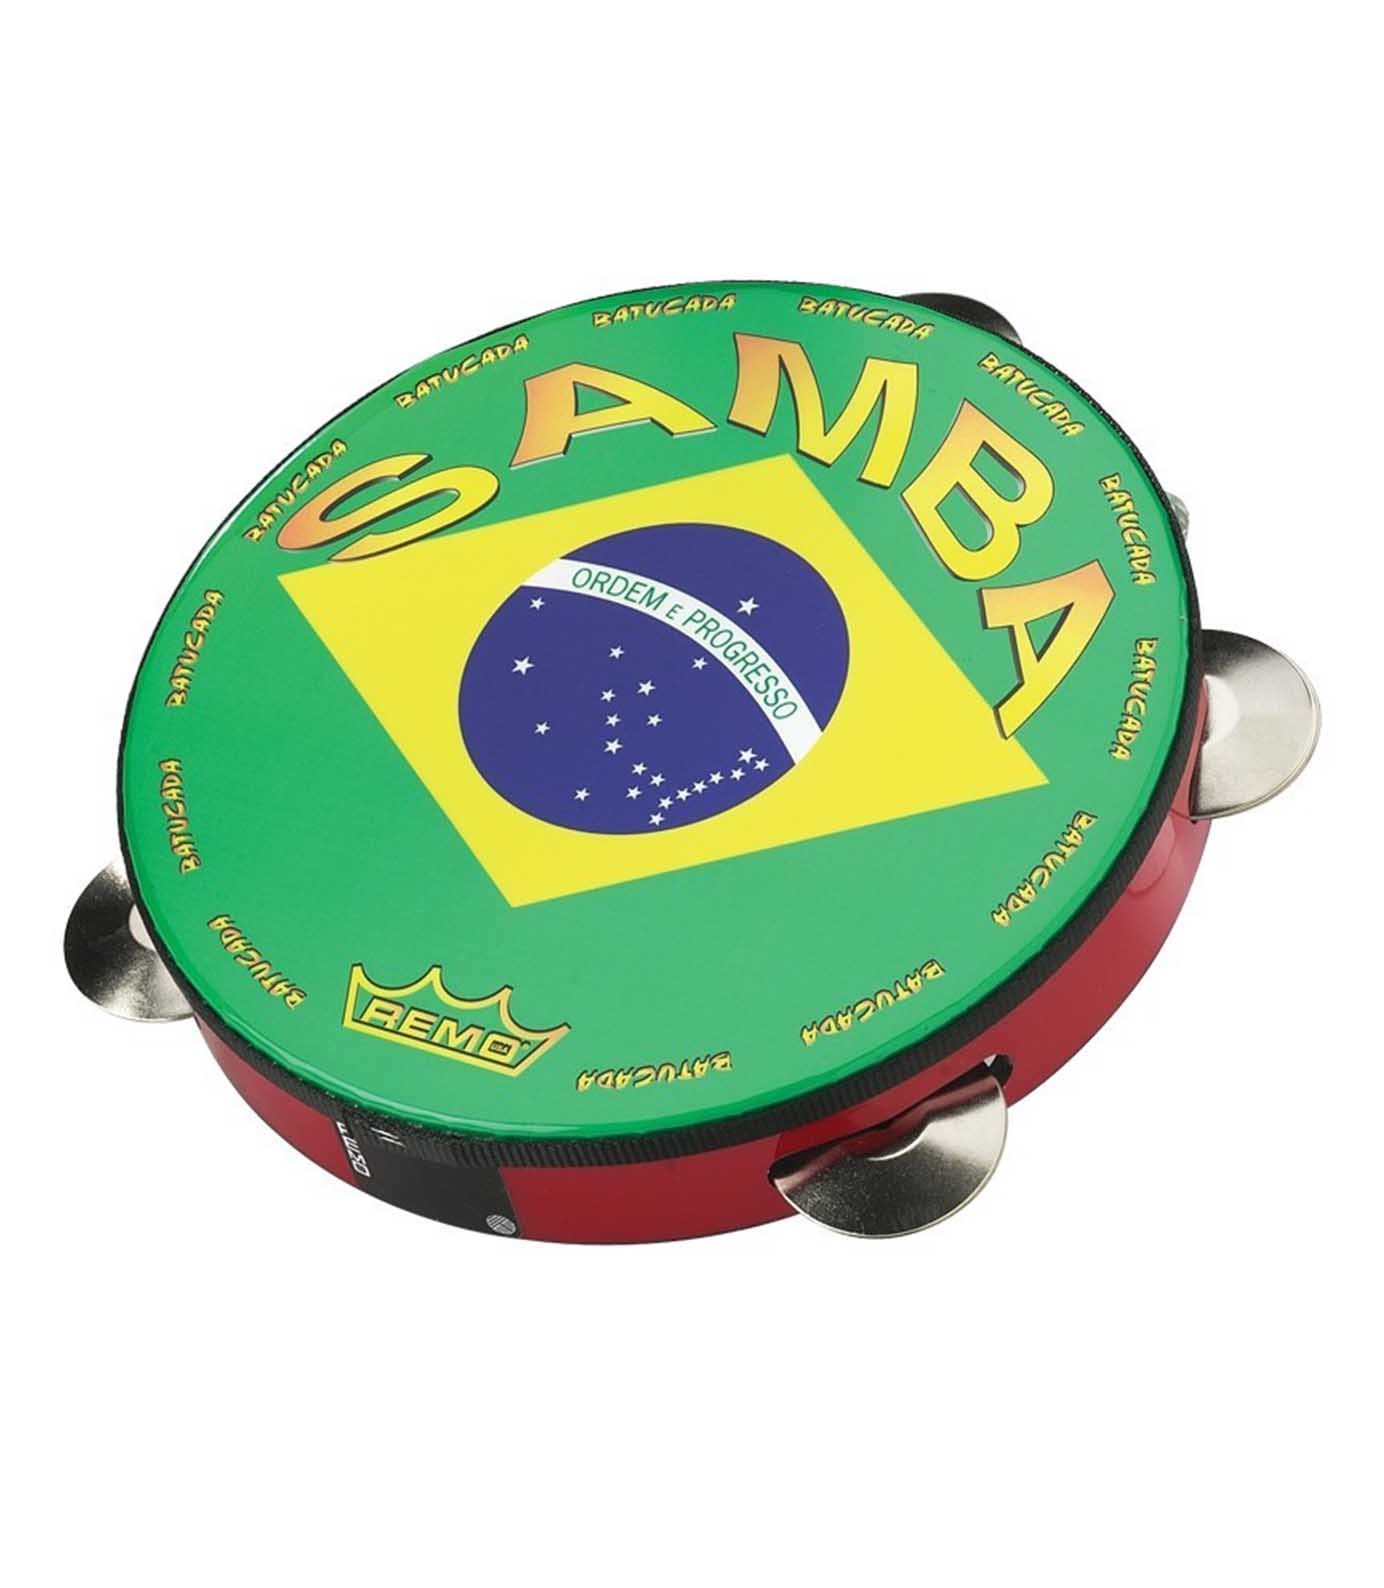 Remo - Valencia Samba Pandeiro Drum Cherry Red 10 inch